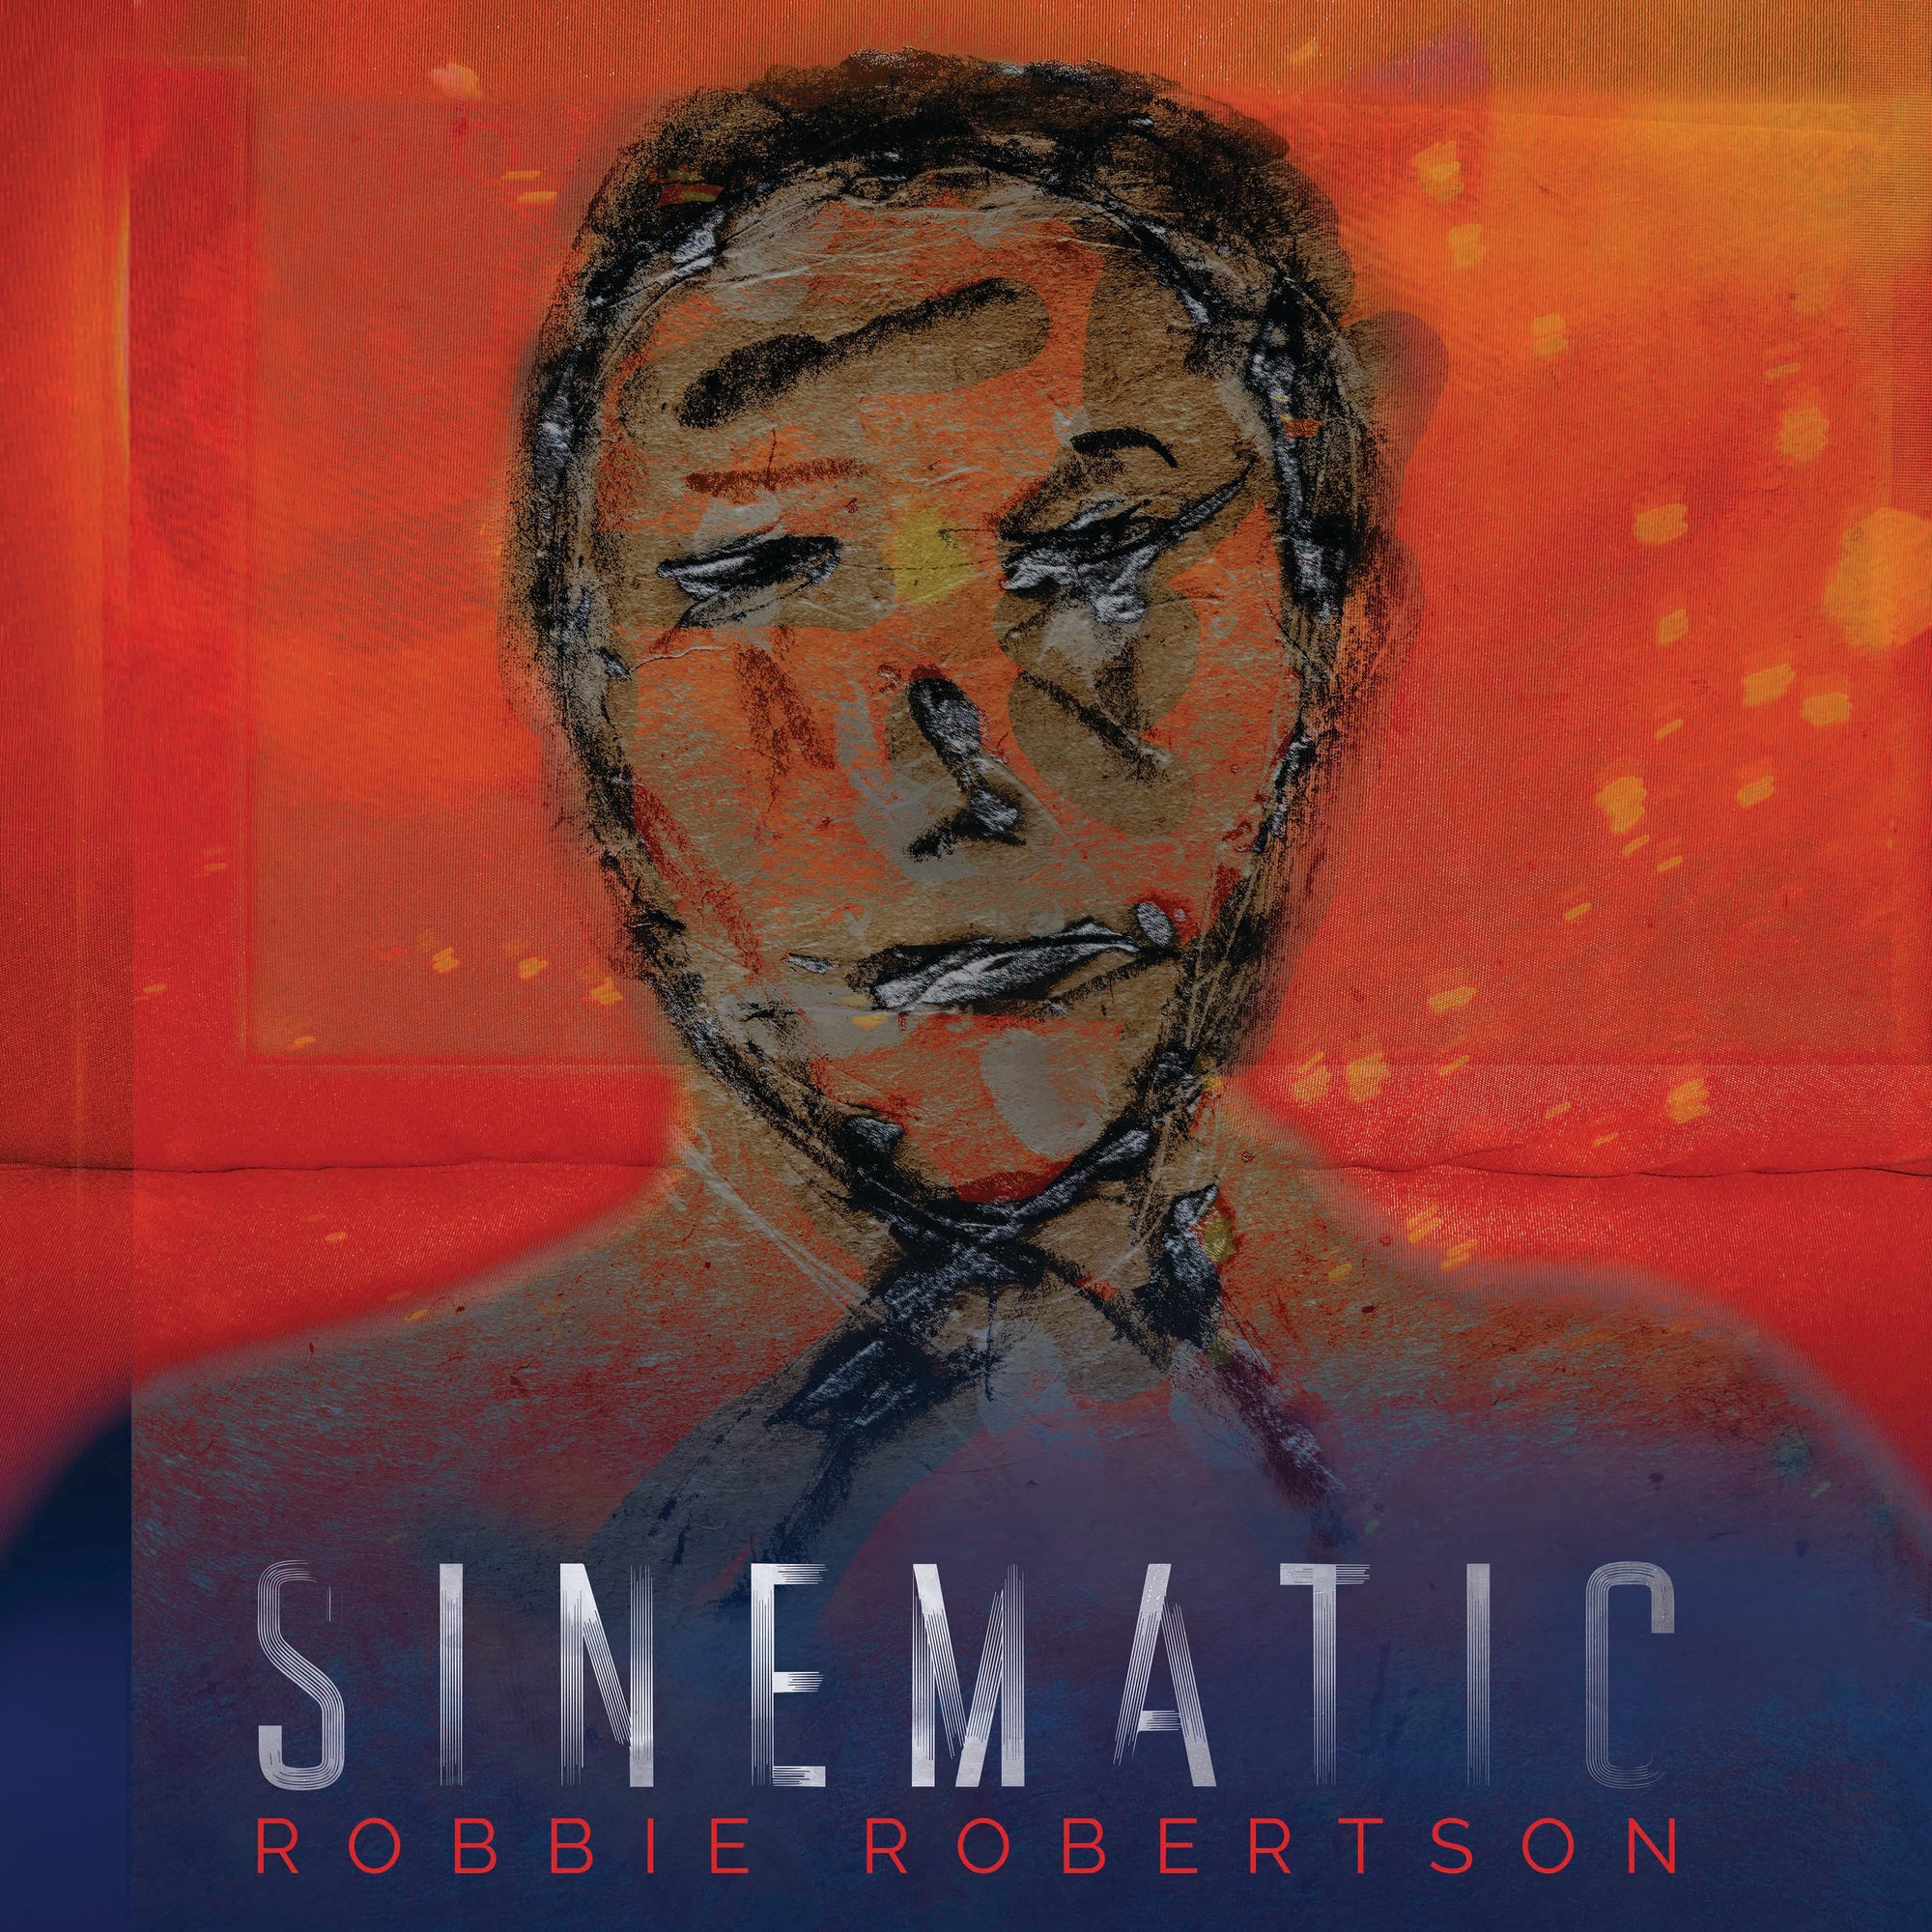 Robbie Robertson - Sinematic (Vinyl 2LP)